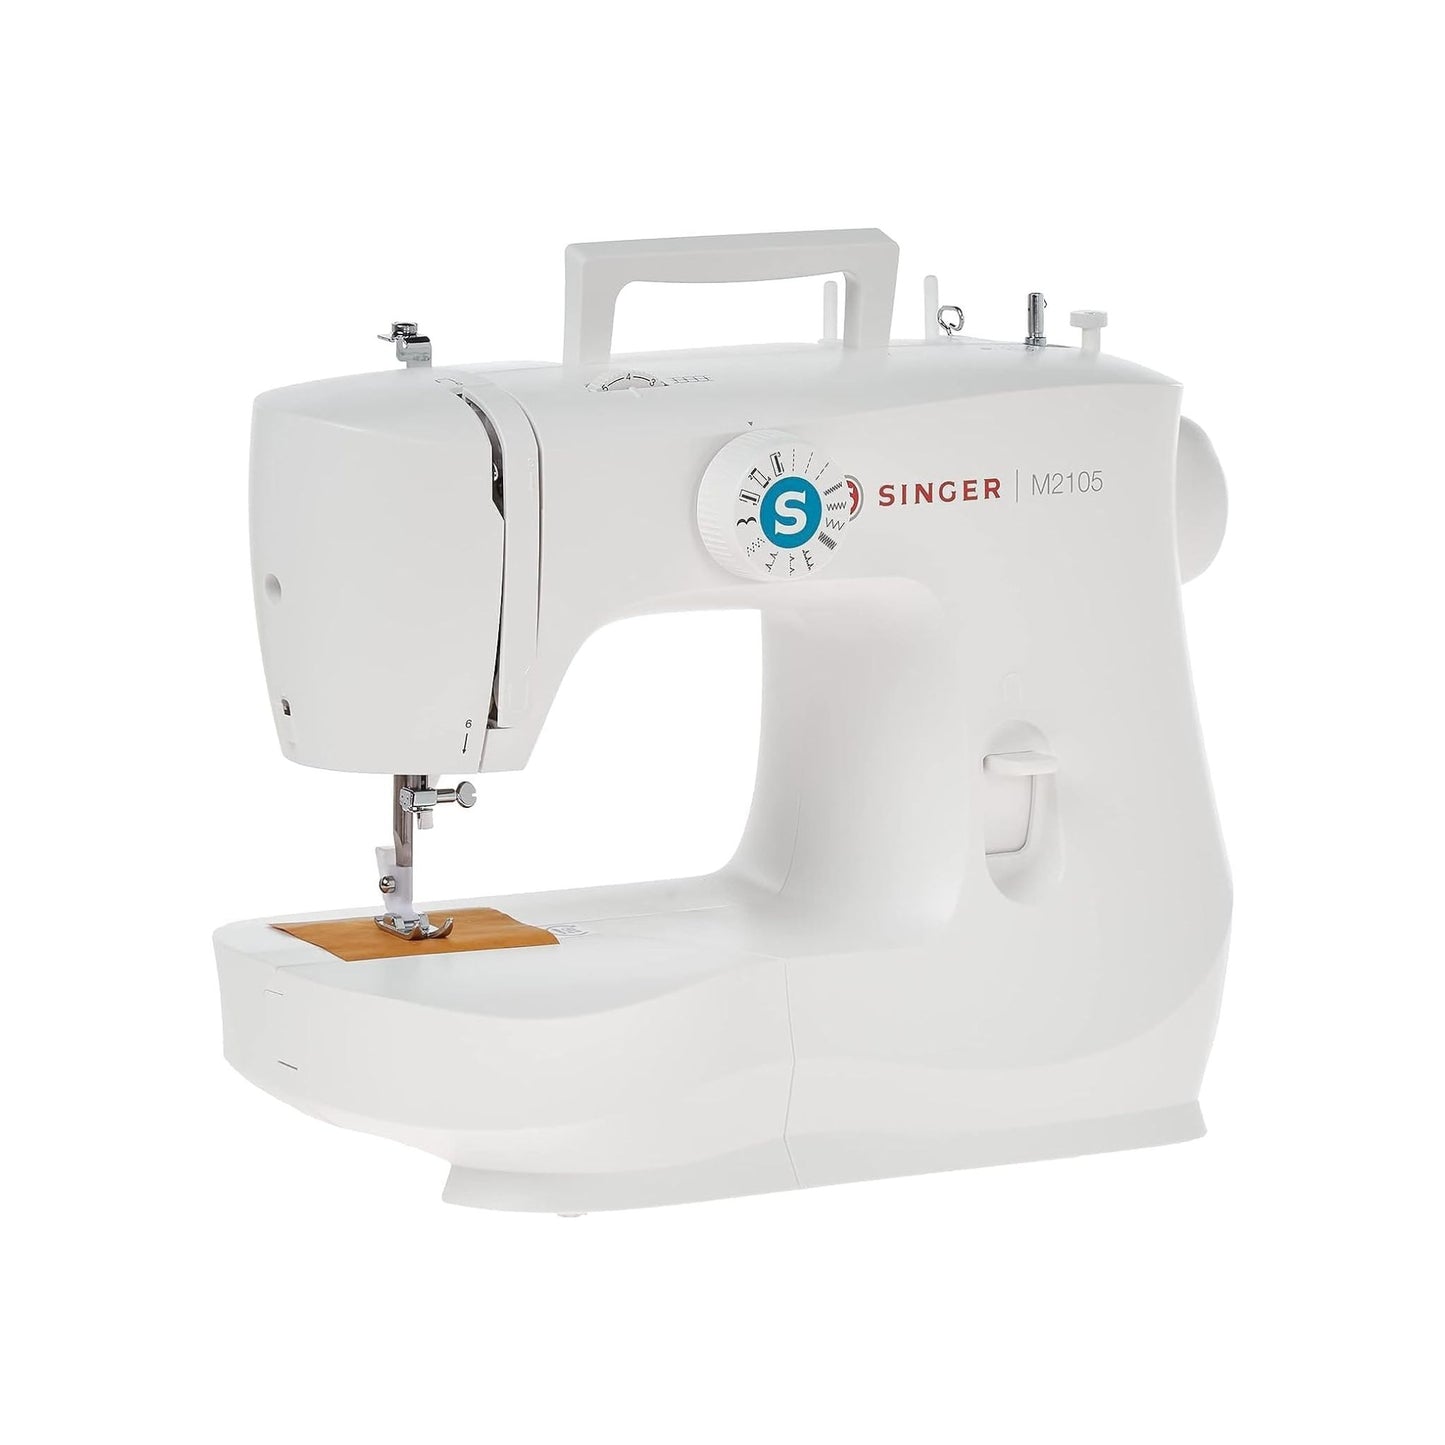 Singer M2105 - Sewing machine - White - Side view